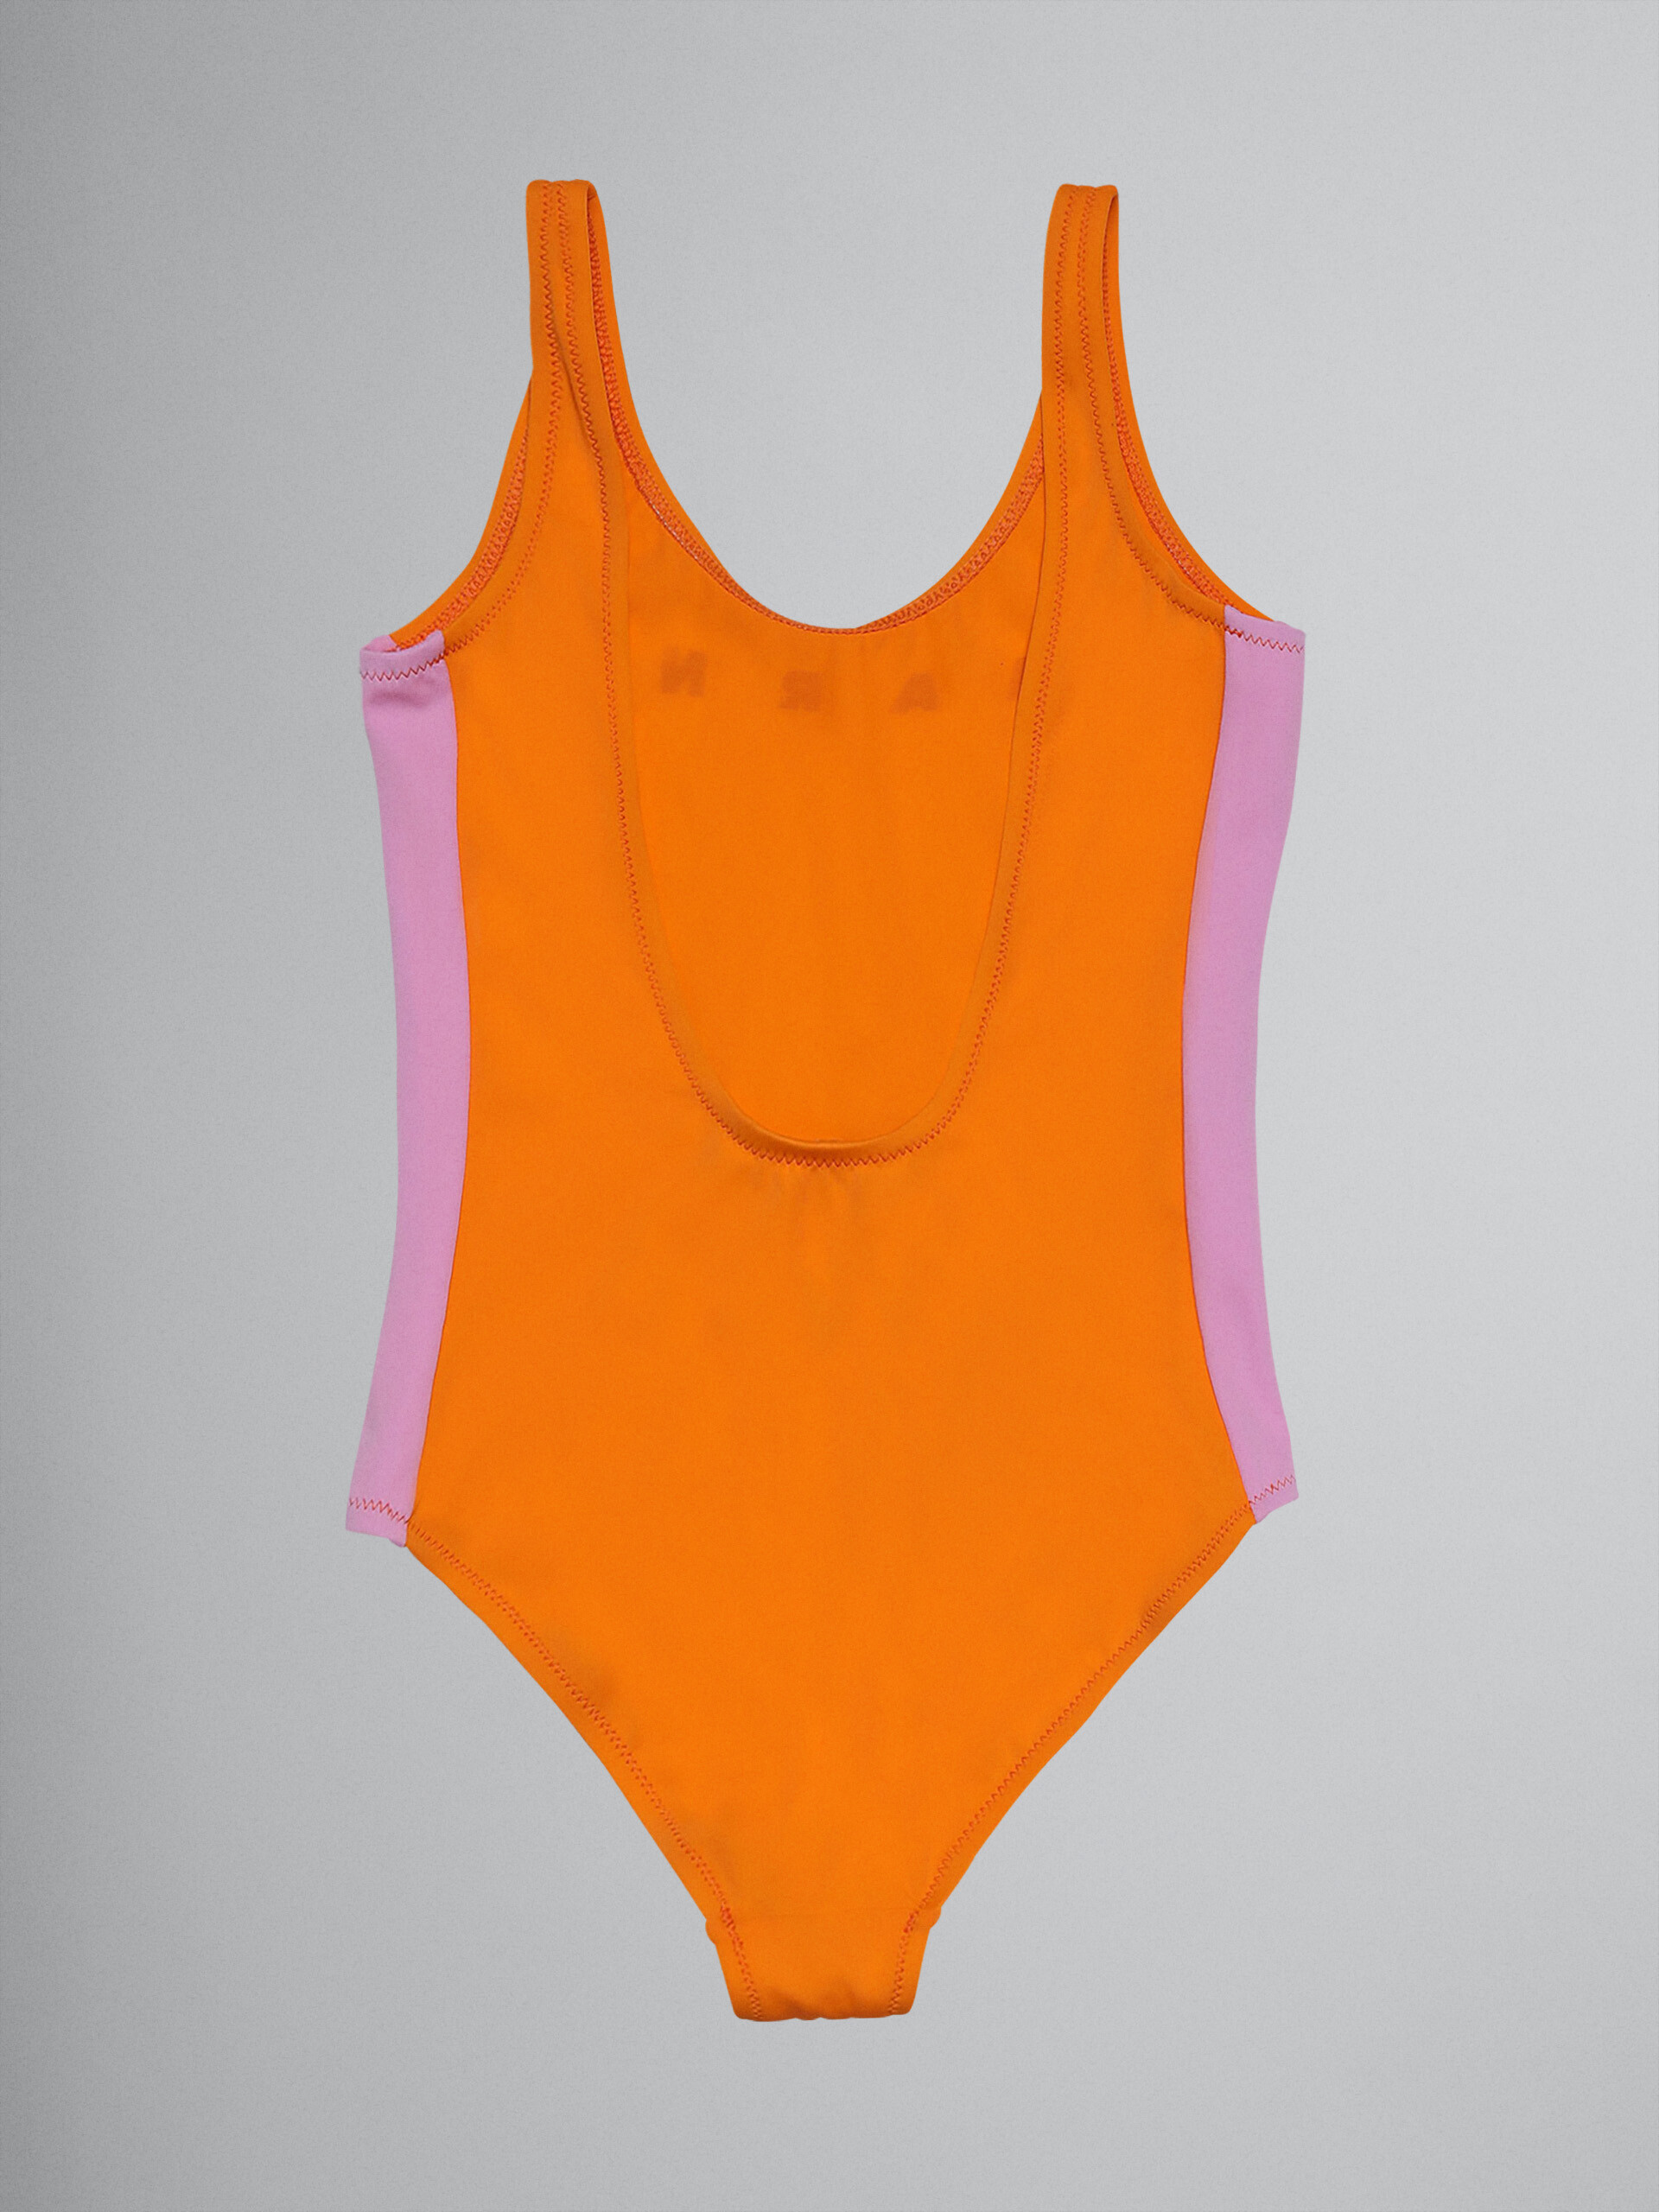 Badeanzug aus Stretchgewebe mit Logo-Print. - Beachwear - Image 2